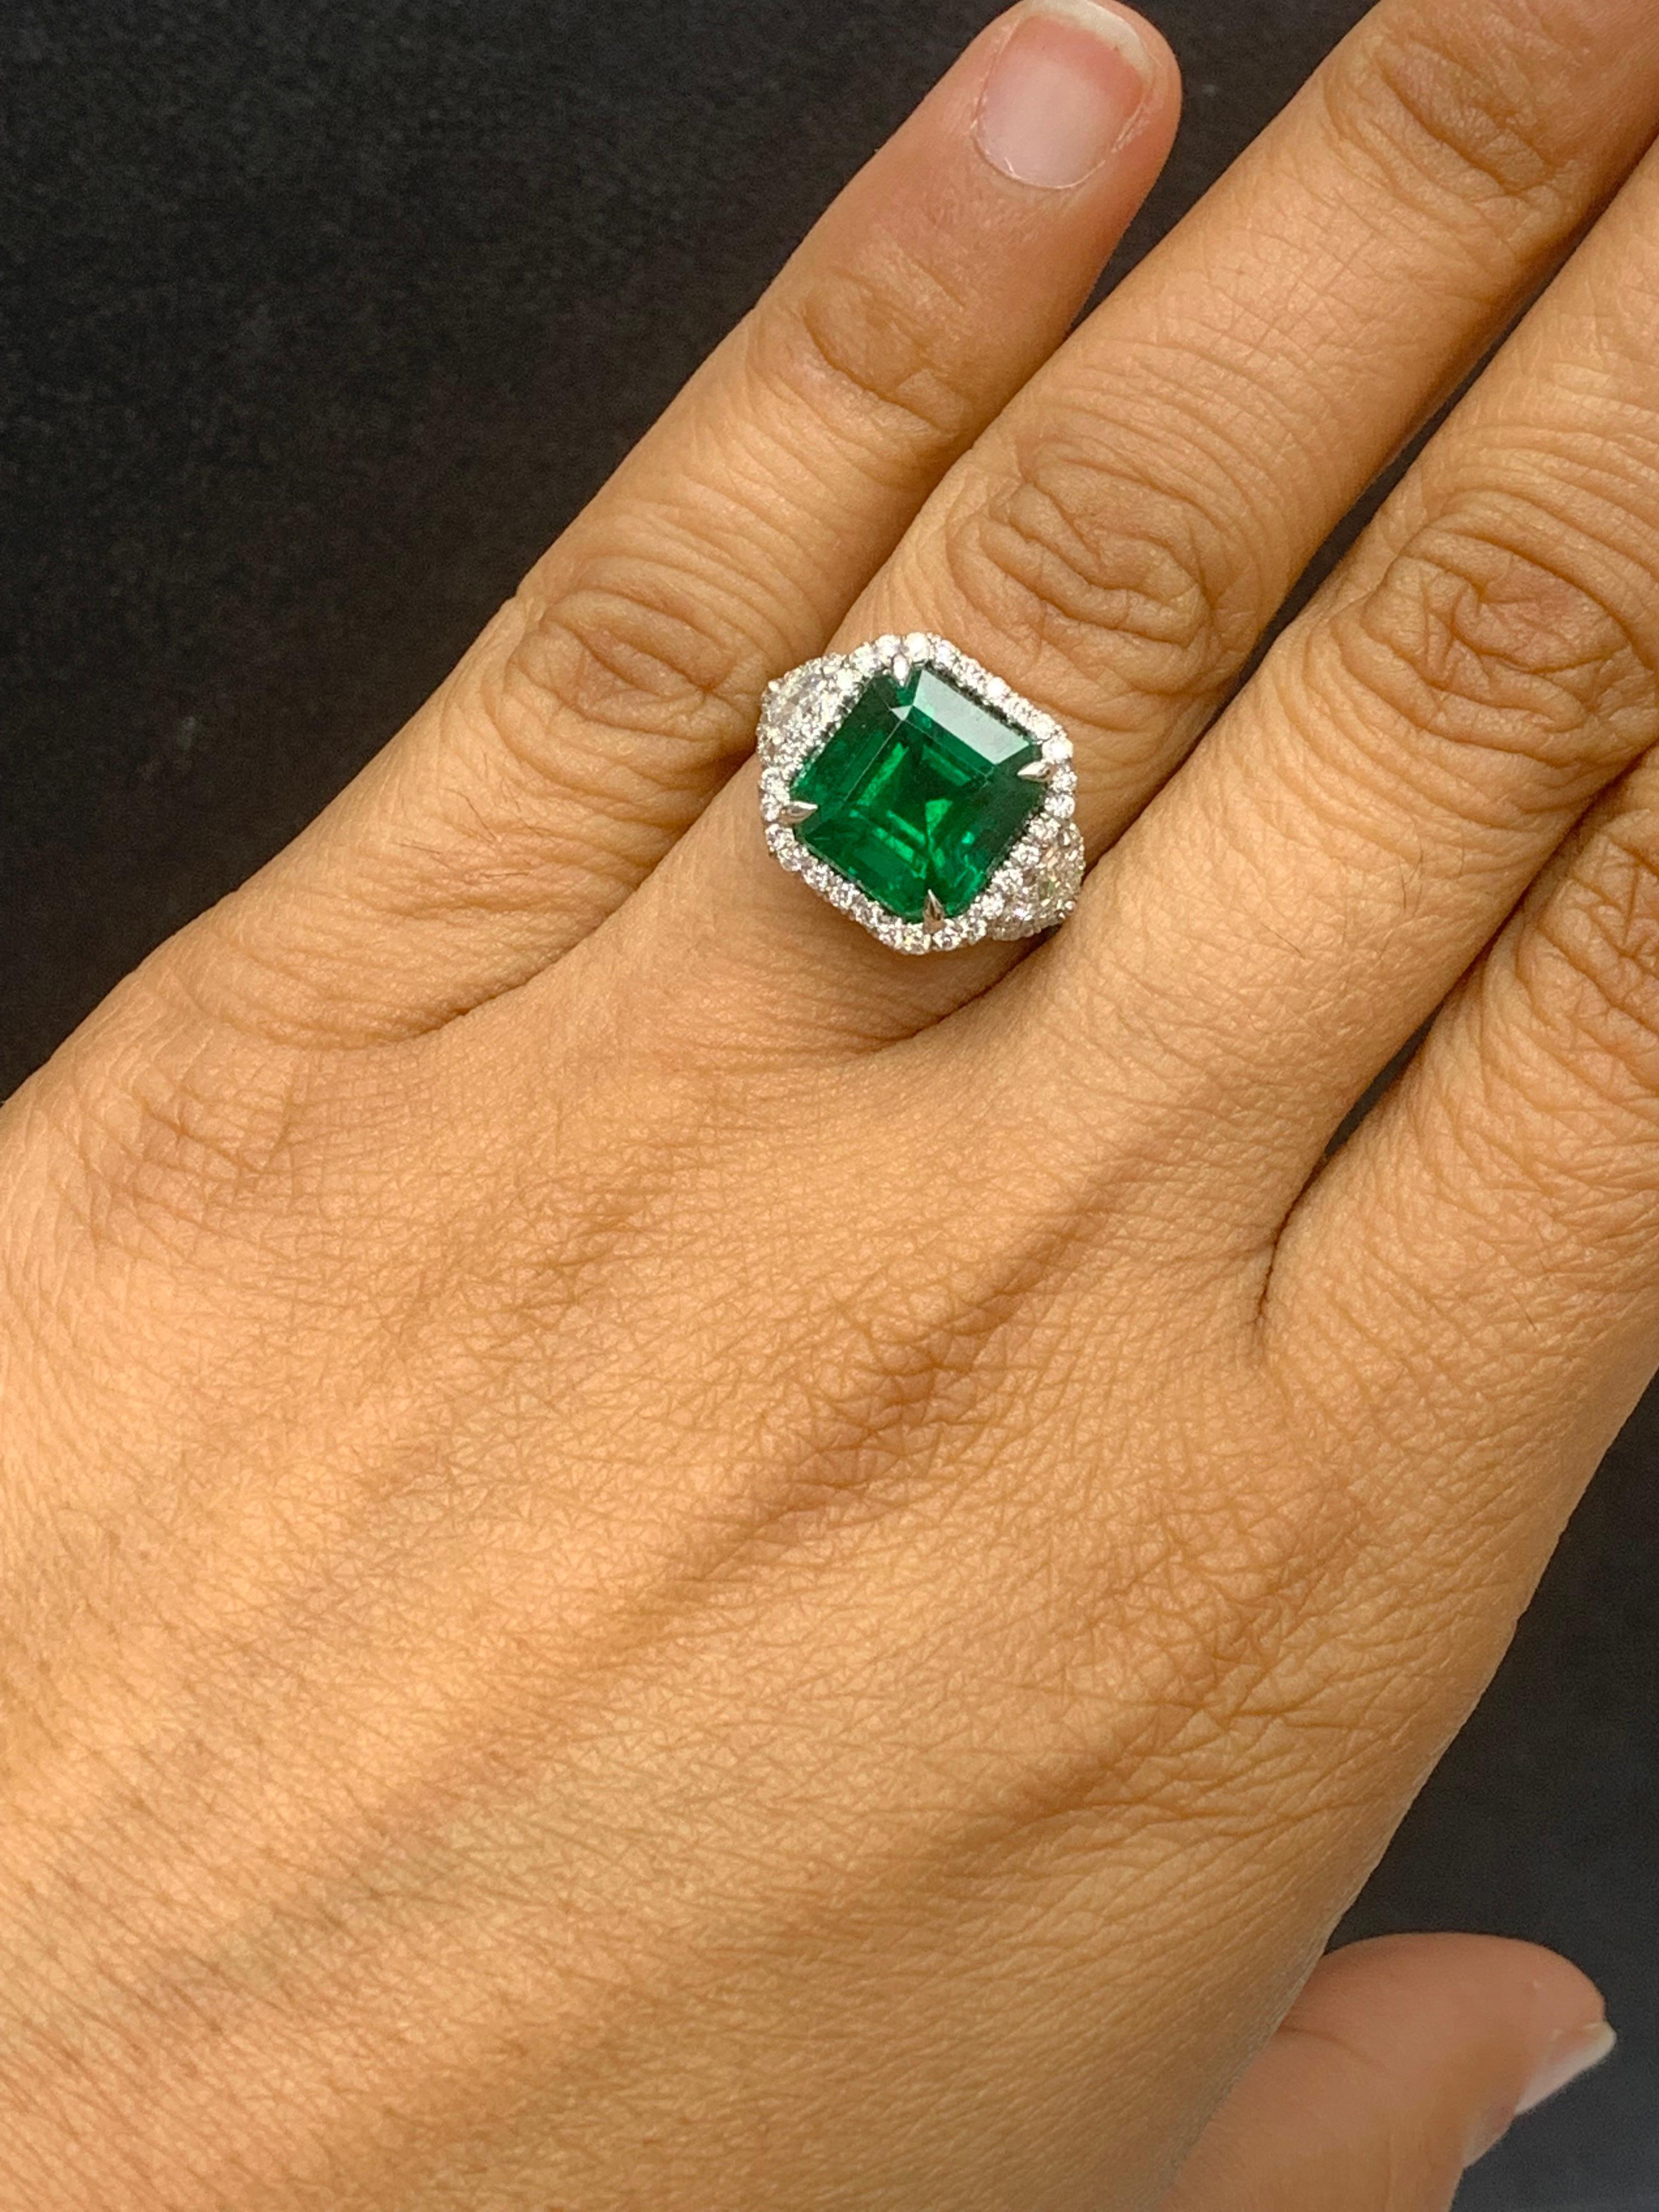 Certified 5.23 Carat Emerald Cut Emerald Diamond 3 Stone Halo Ring in Platinum For Sale 4